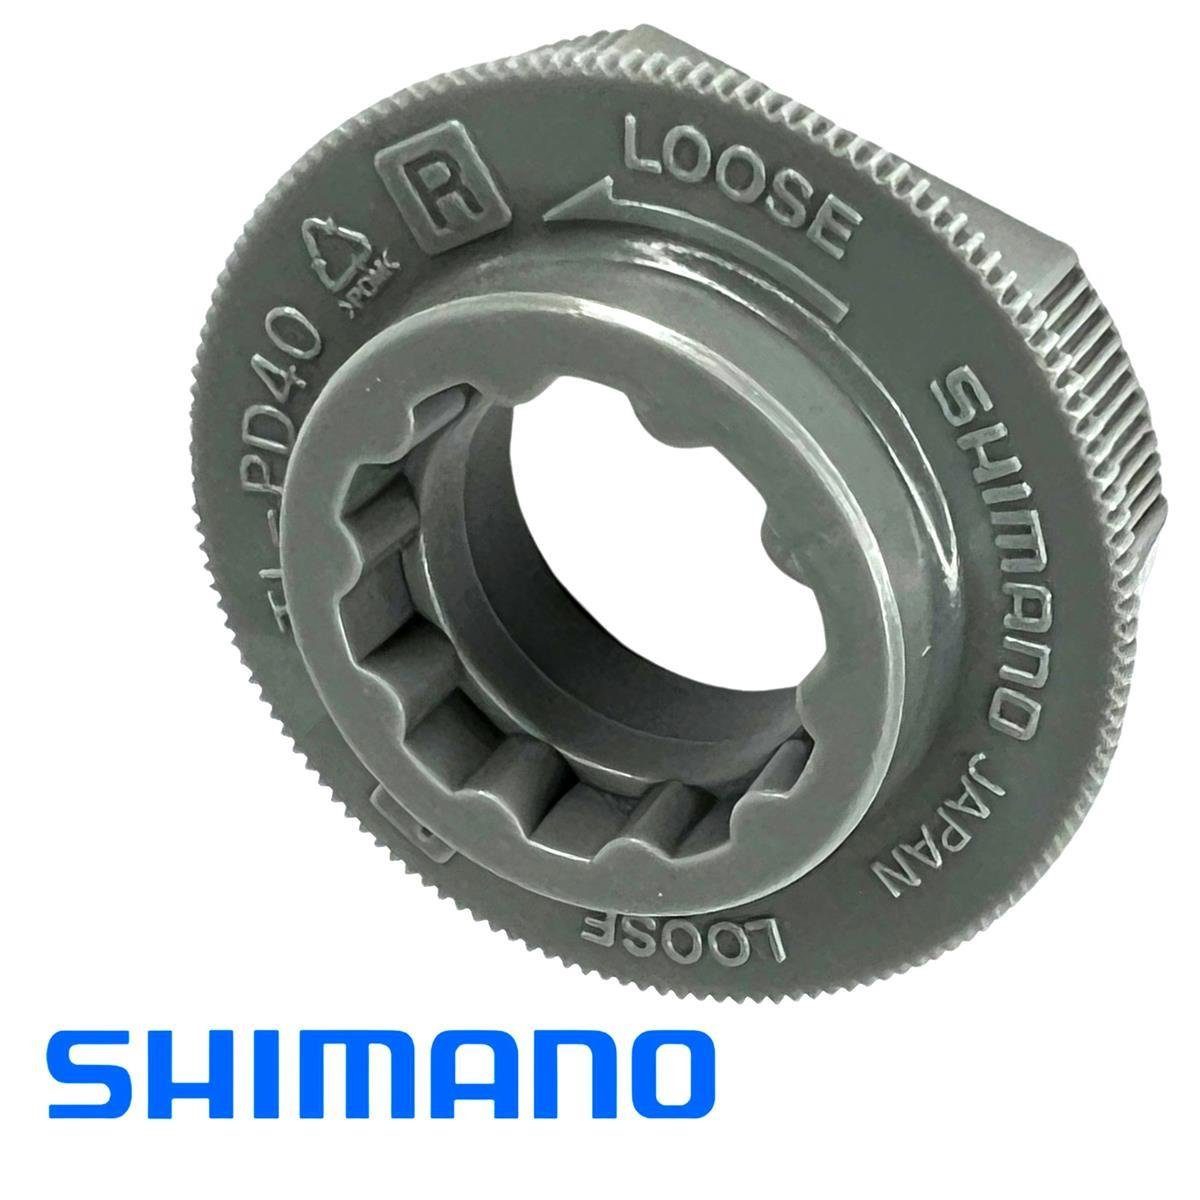 Shimano Fahrrad-Montageständer Shimano TL-PD40 Pedalachse Montage Werkzeug Demontage für &